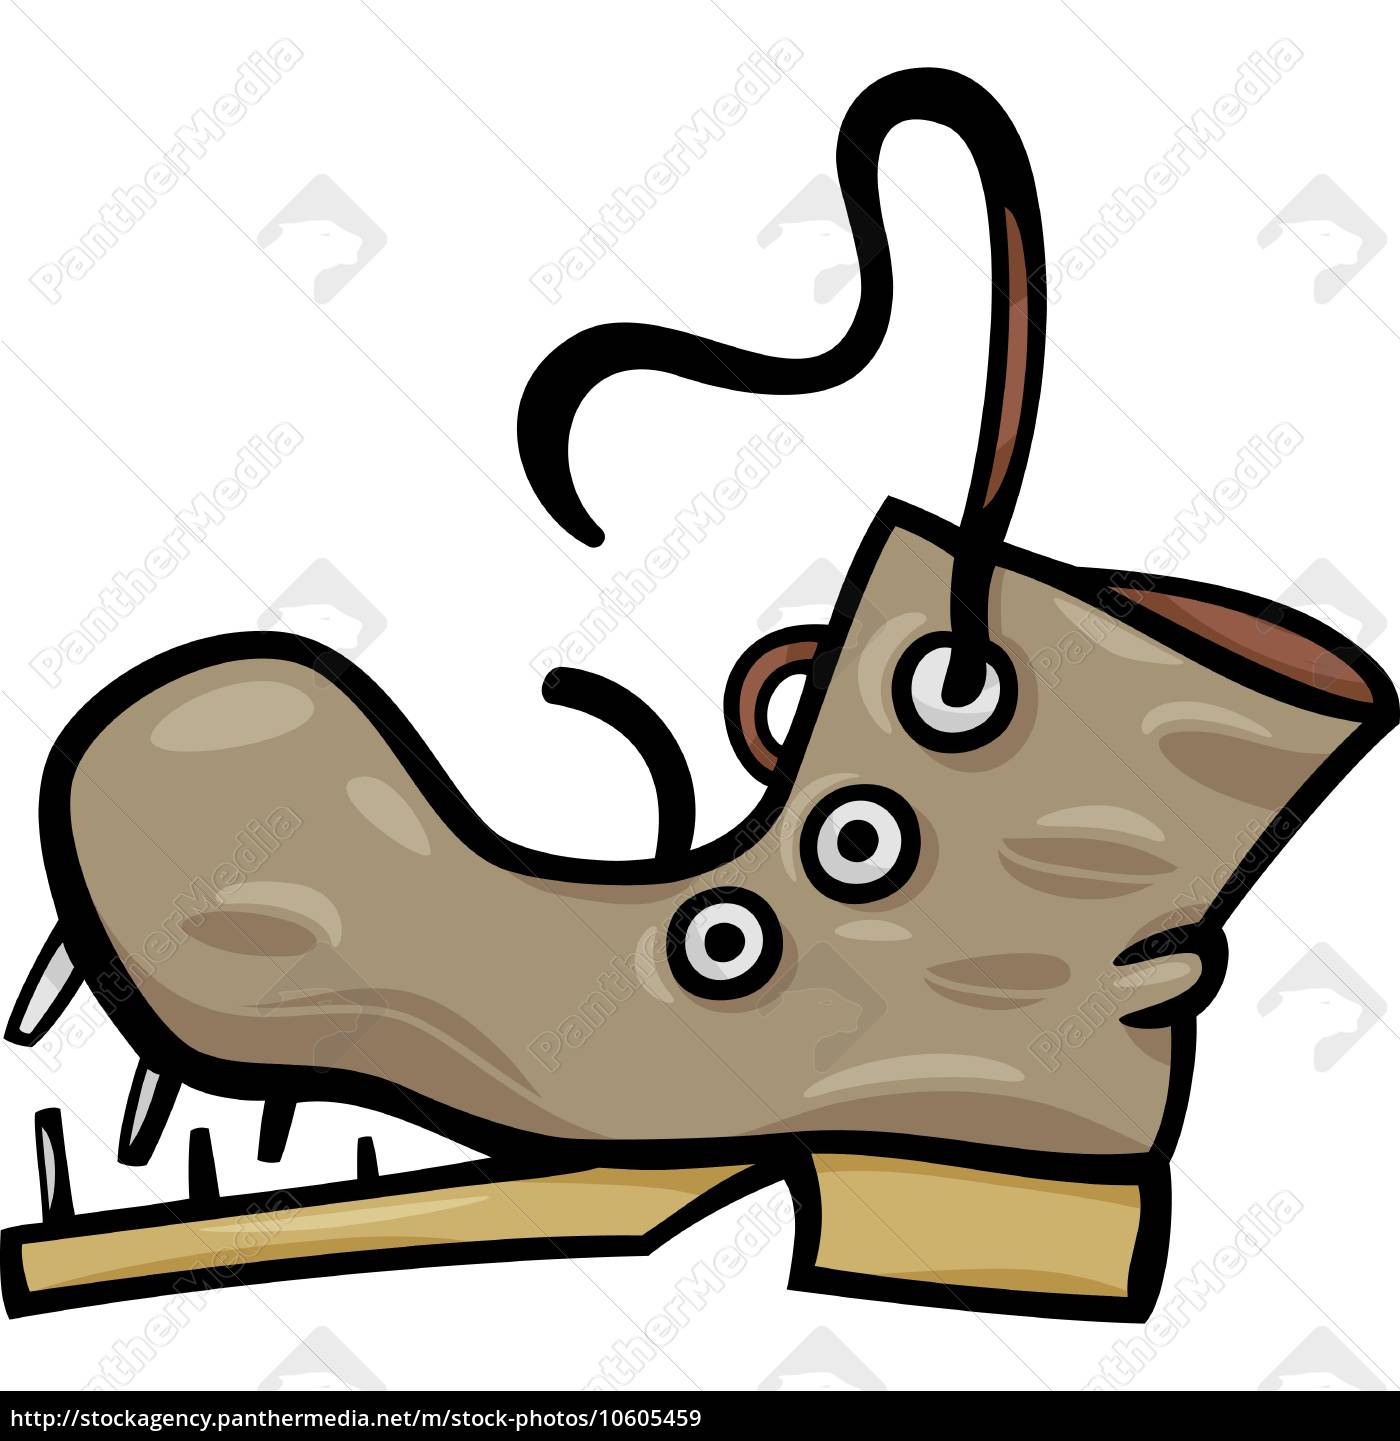 tweet Sindsro Et kors gammel sko eller boot tegneserie clipart - Stockphoto #10605459 |  PantherMedia Billedbureau